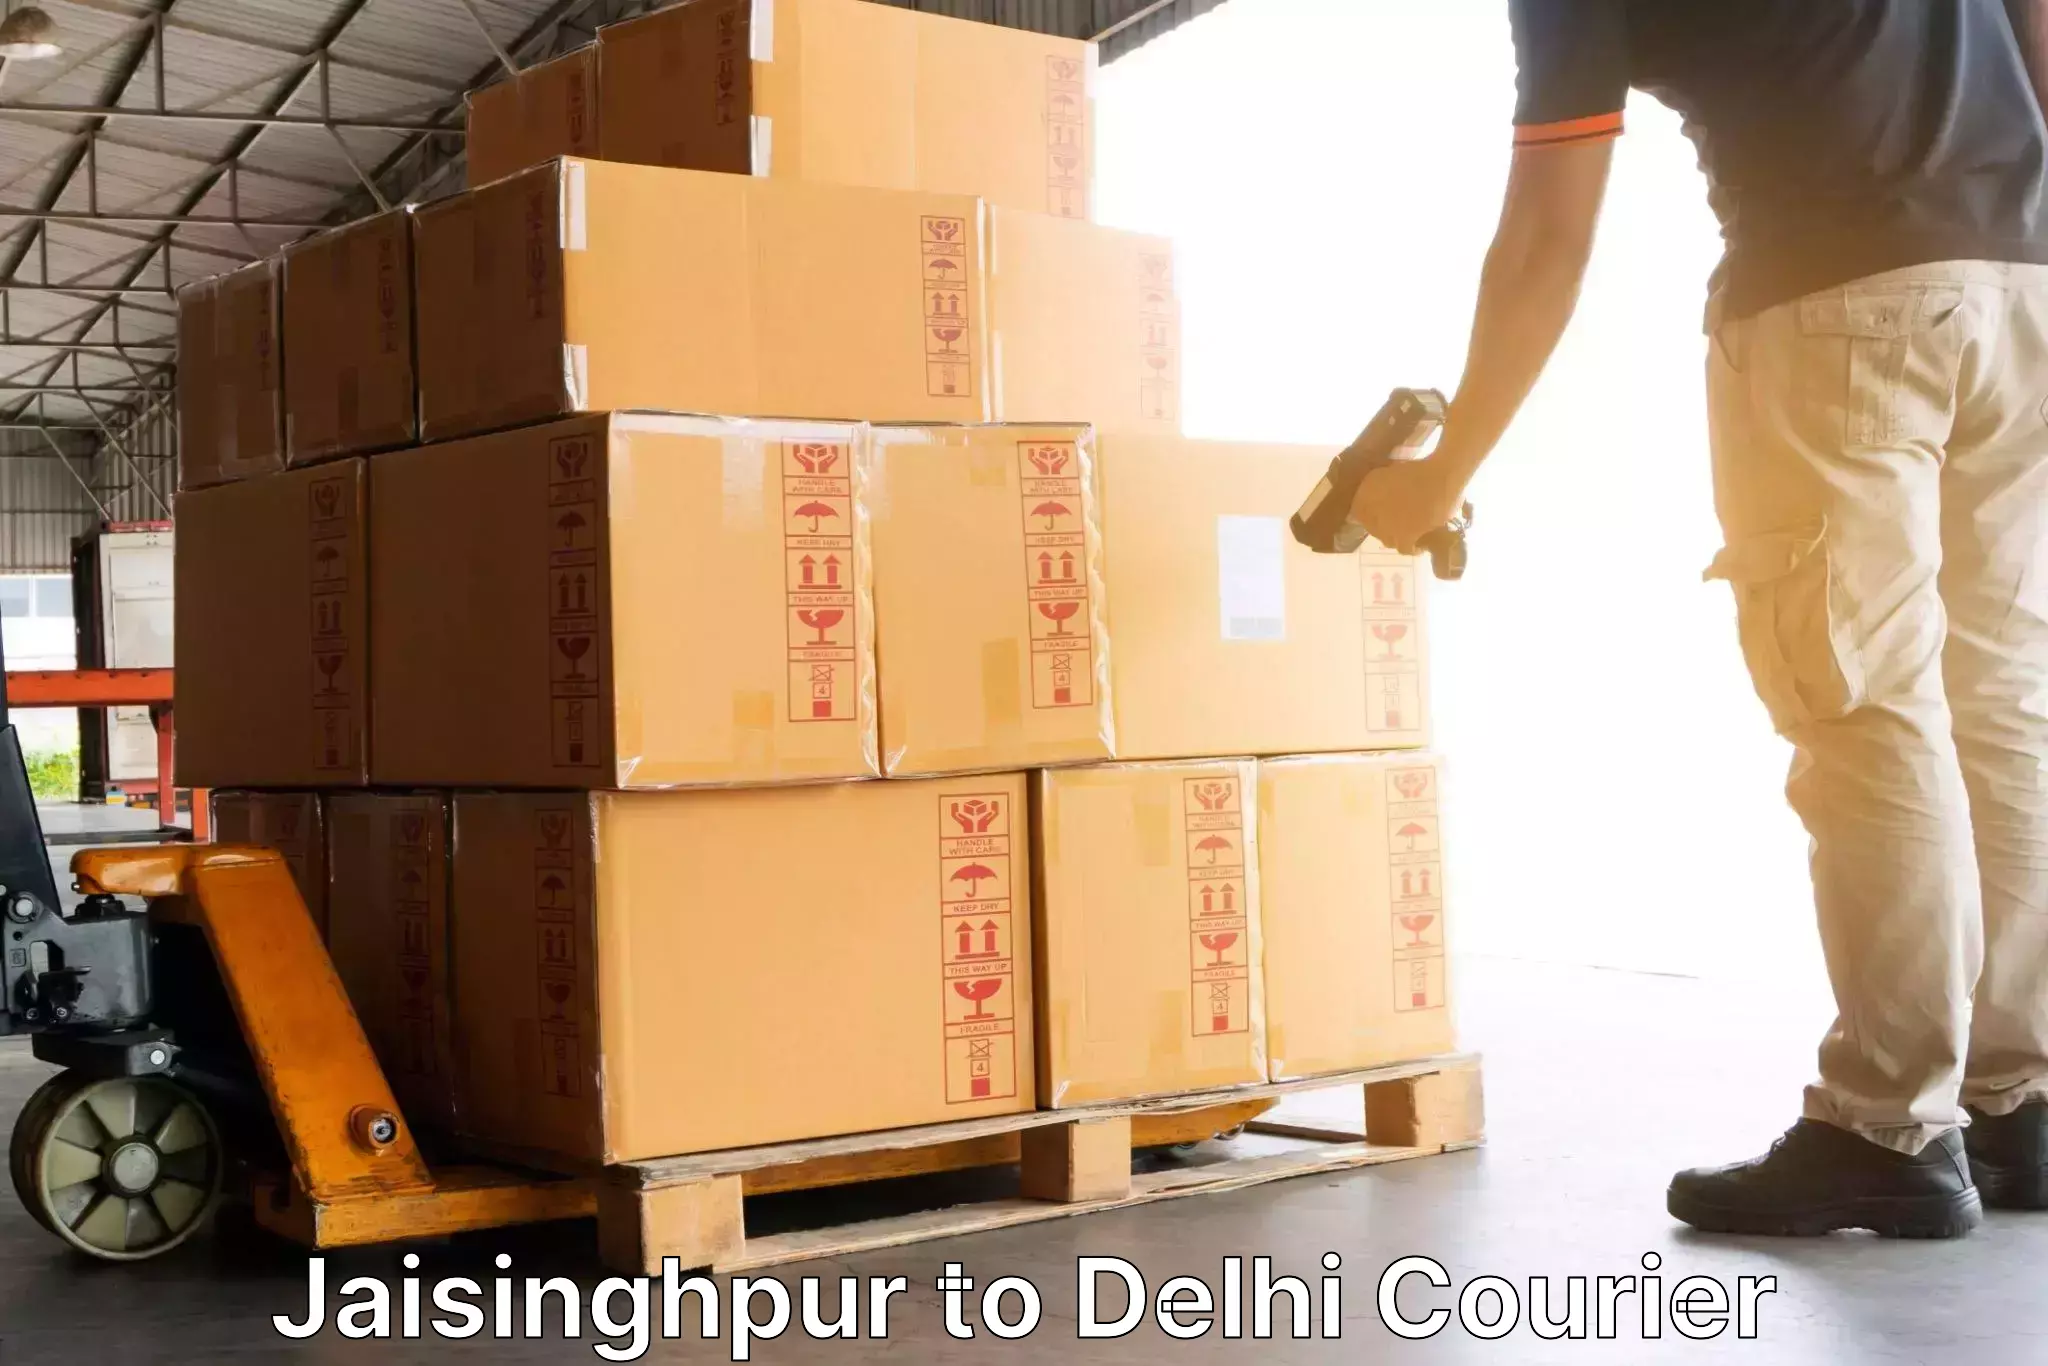 Express logistics service Jaisinghpur to NCR